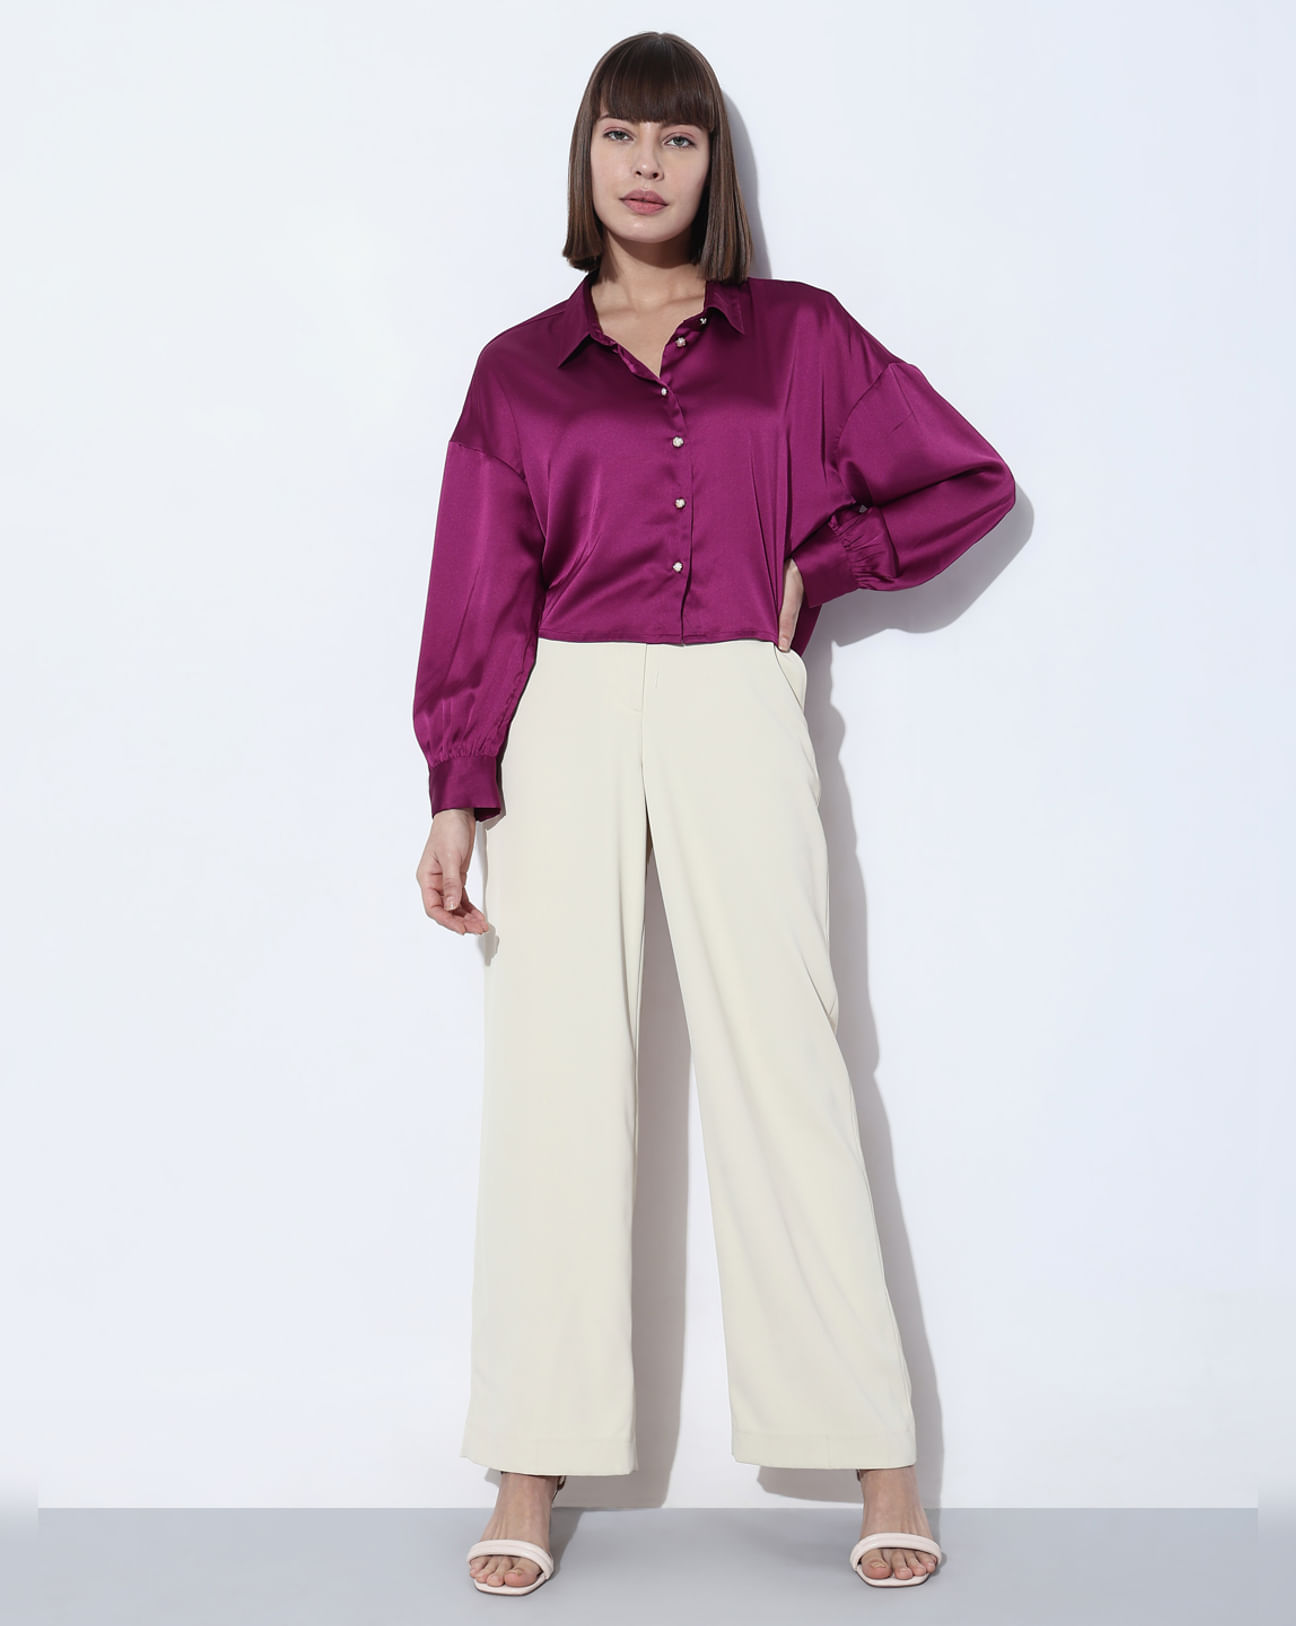 NWT. Zara Purple Satin Full Length High-Waisted Trousers/Pants. Size M.